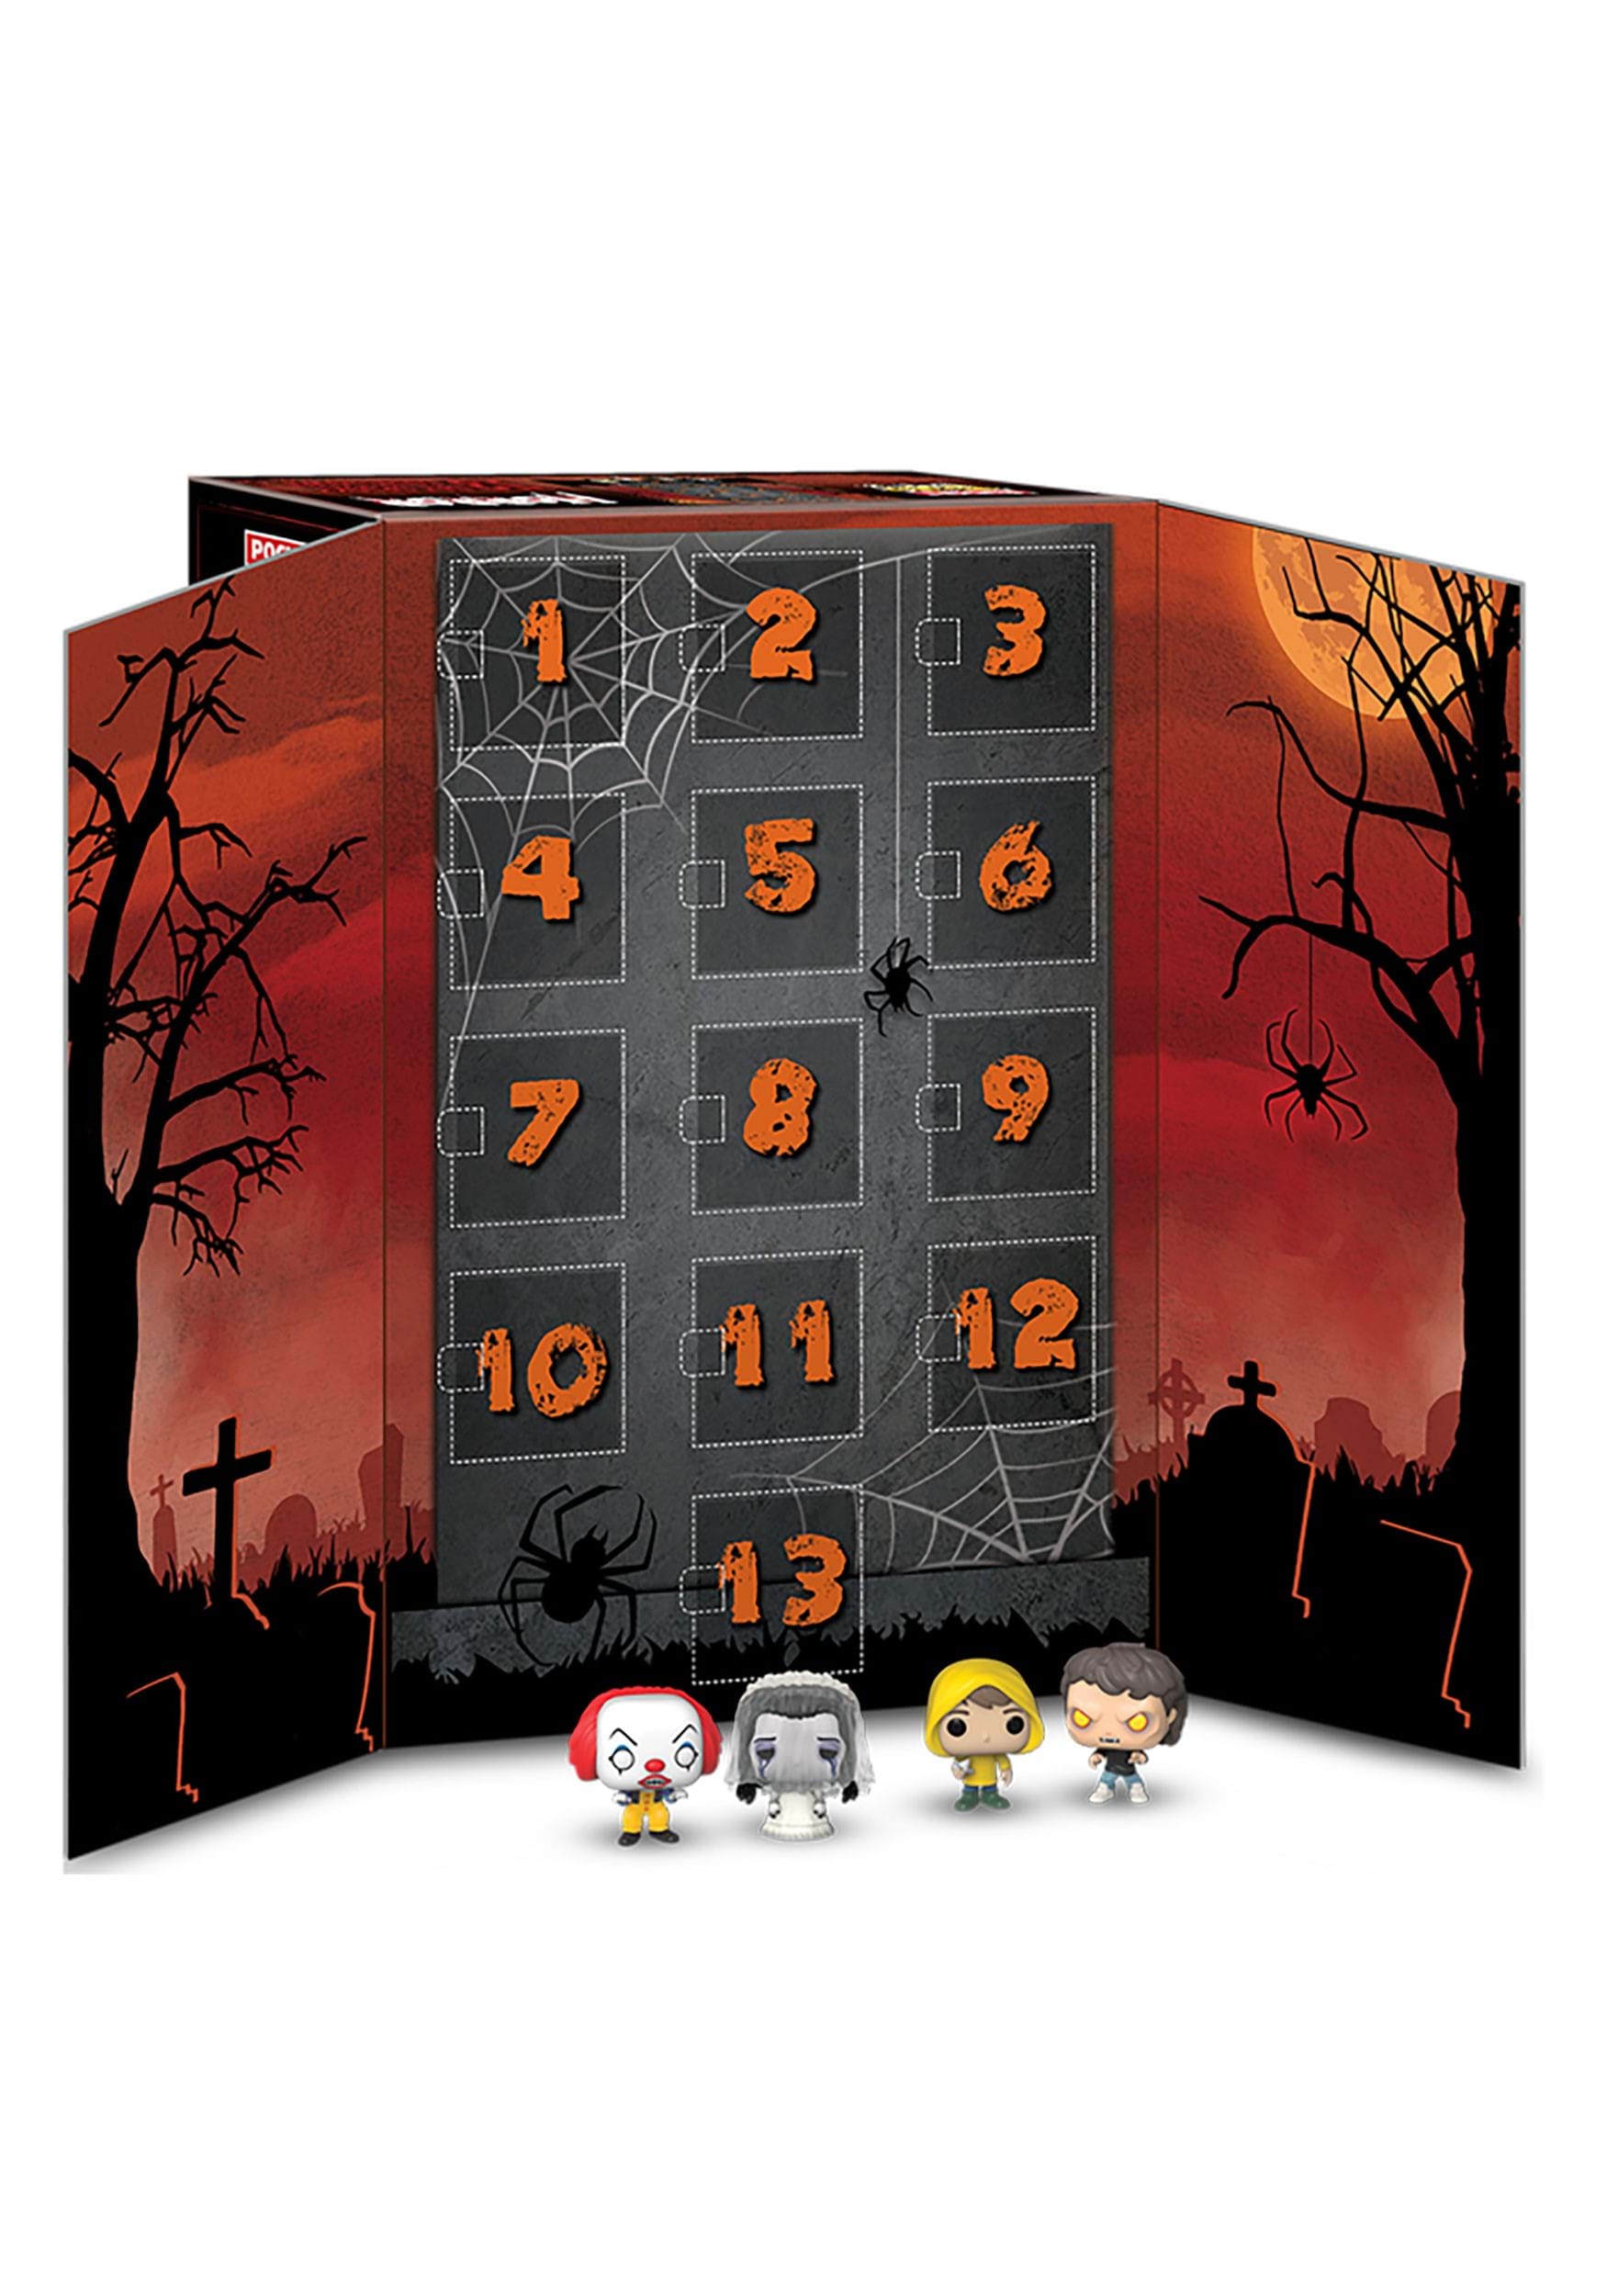 Funko POP! Advent Calendar: 13-Day Spooky Countdown , Halloween Advent Calendars